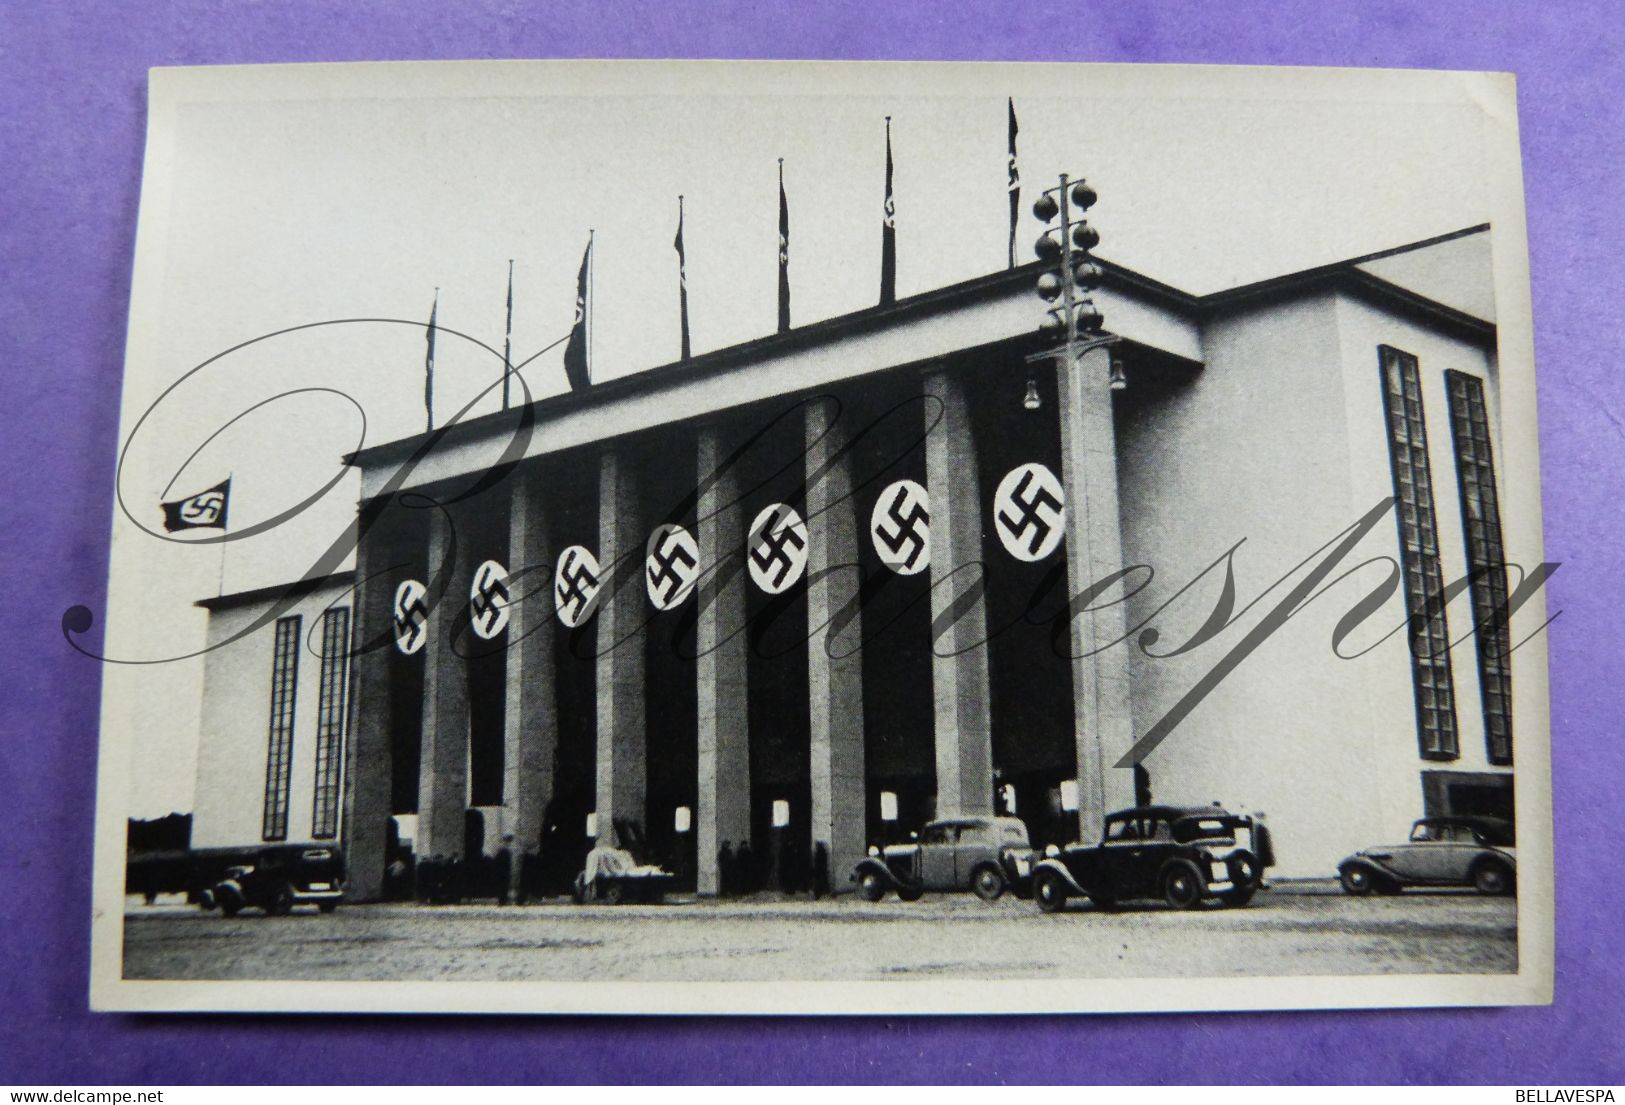 OLYMPIA 1936 Deutsche Propaganda Swastika. lot x 16 Bilder chromo 1940-1945